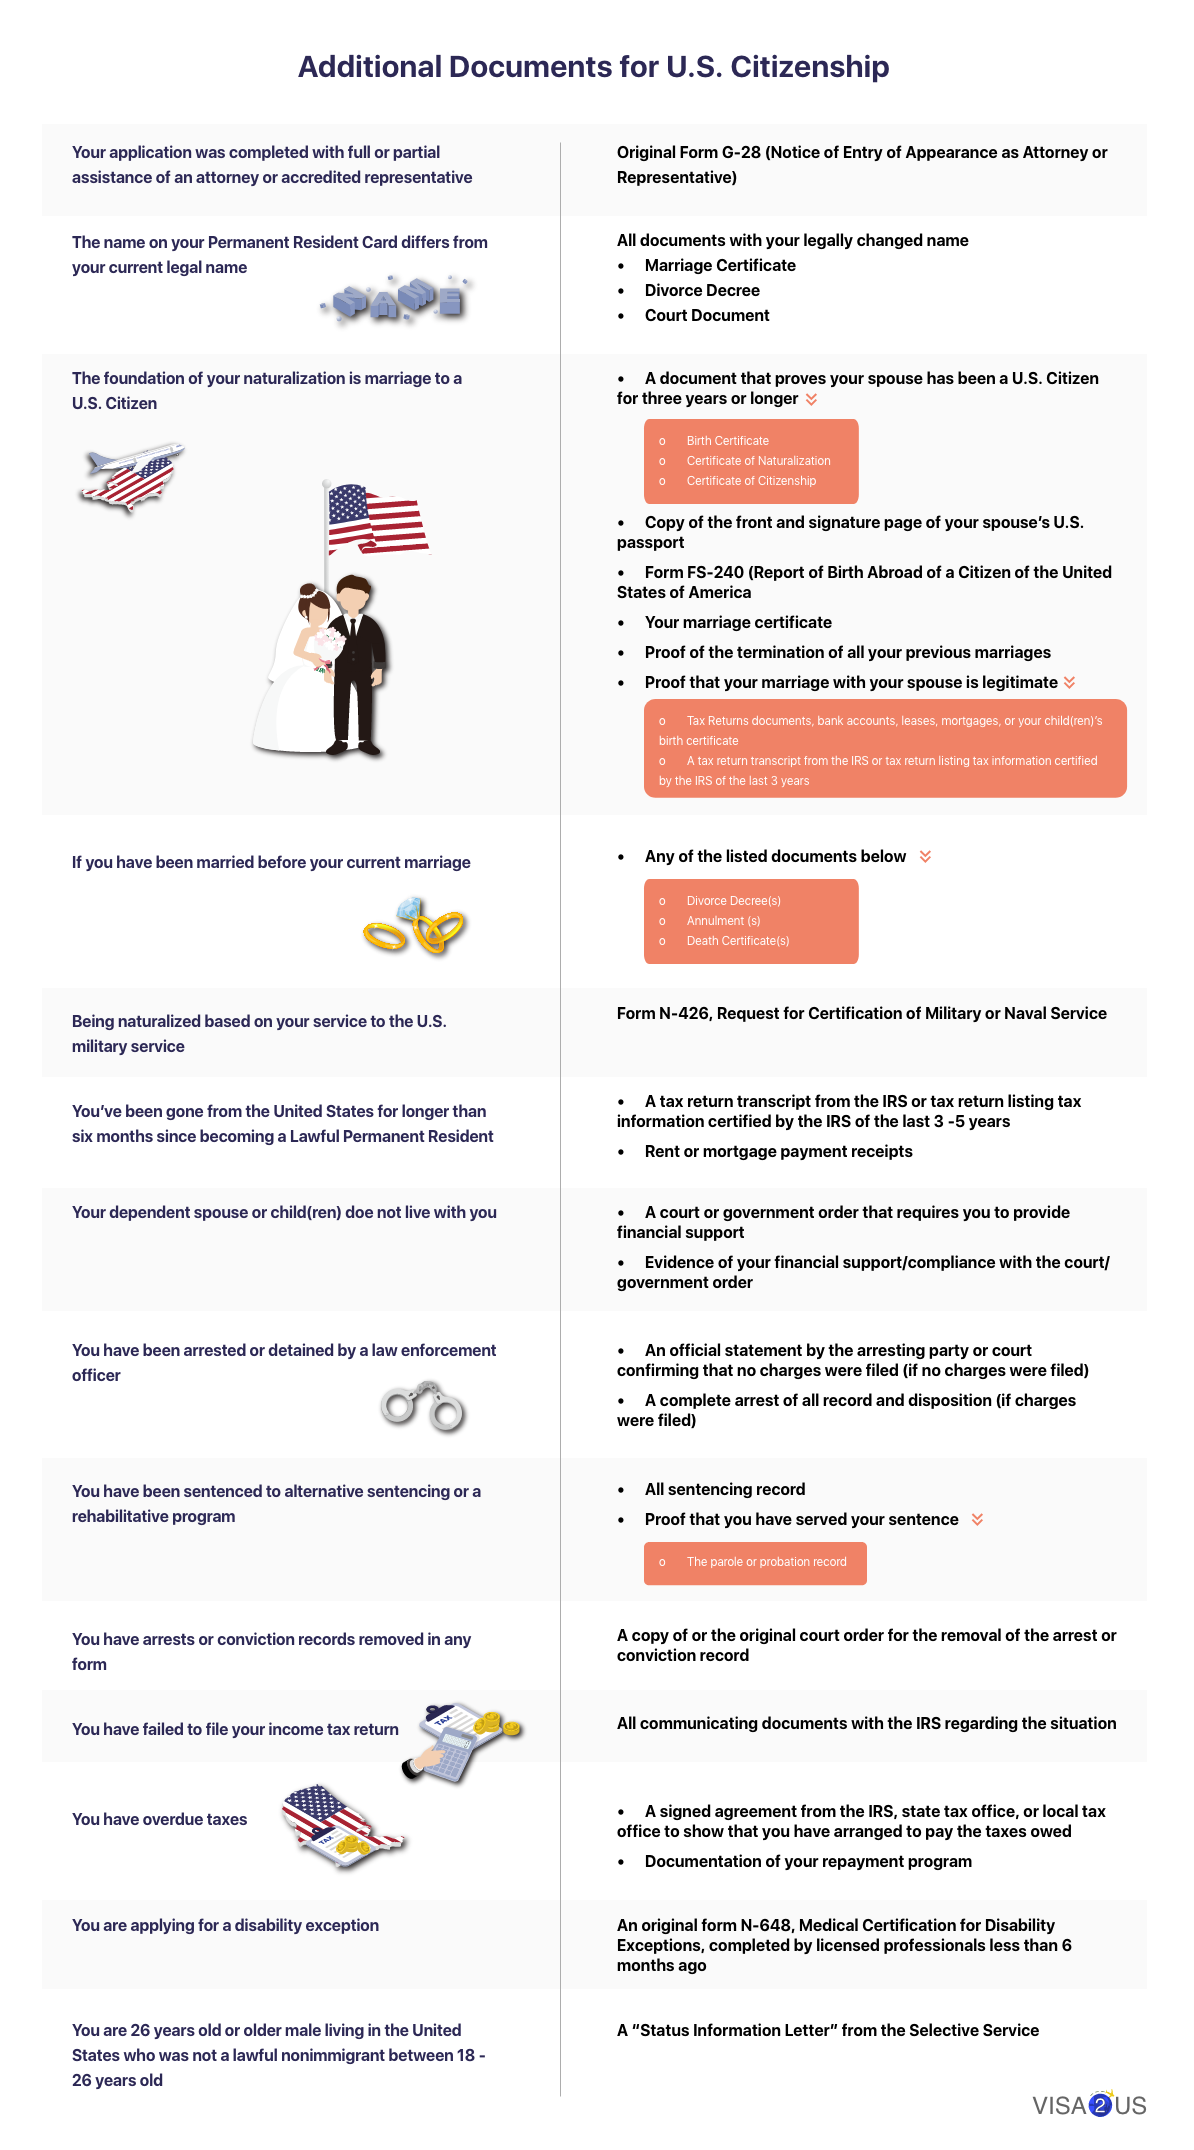 U.S. Citizenship A Complete Guide to Naturalization VISA2US